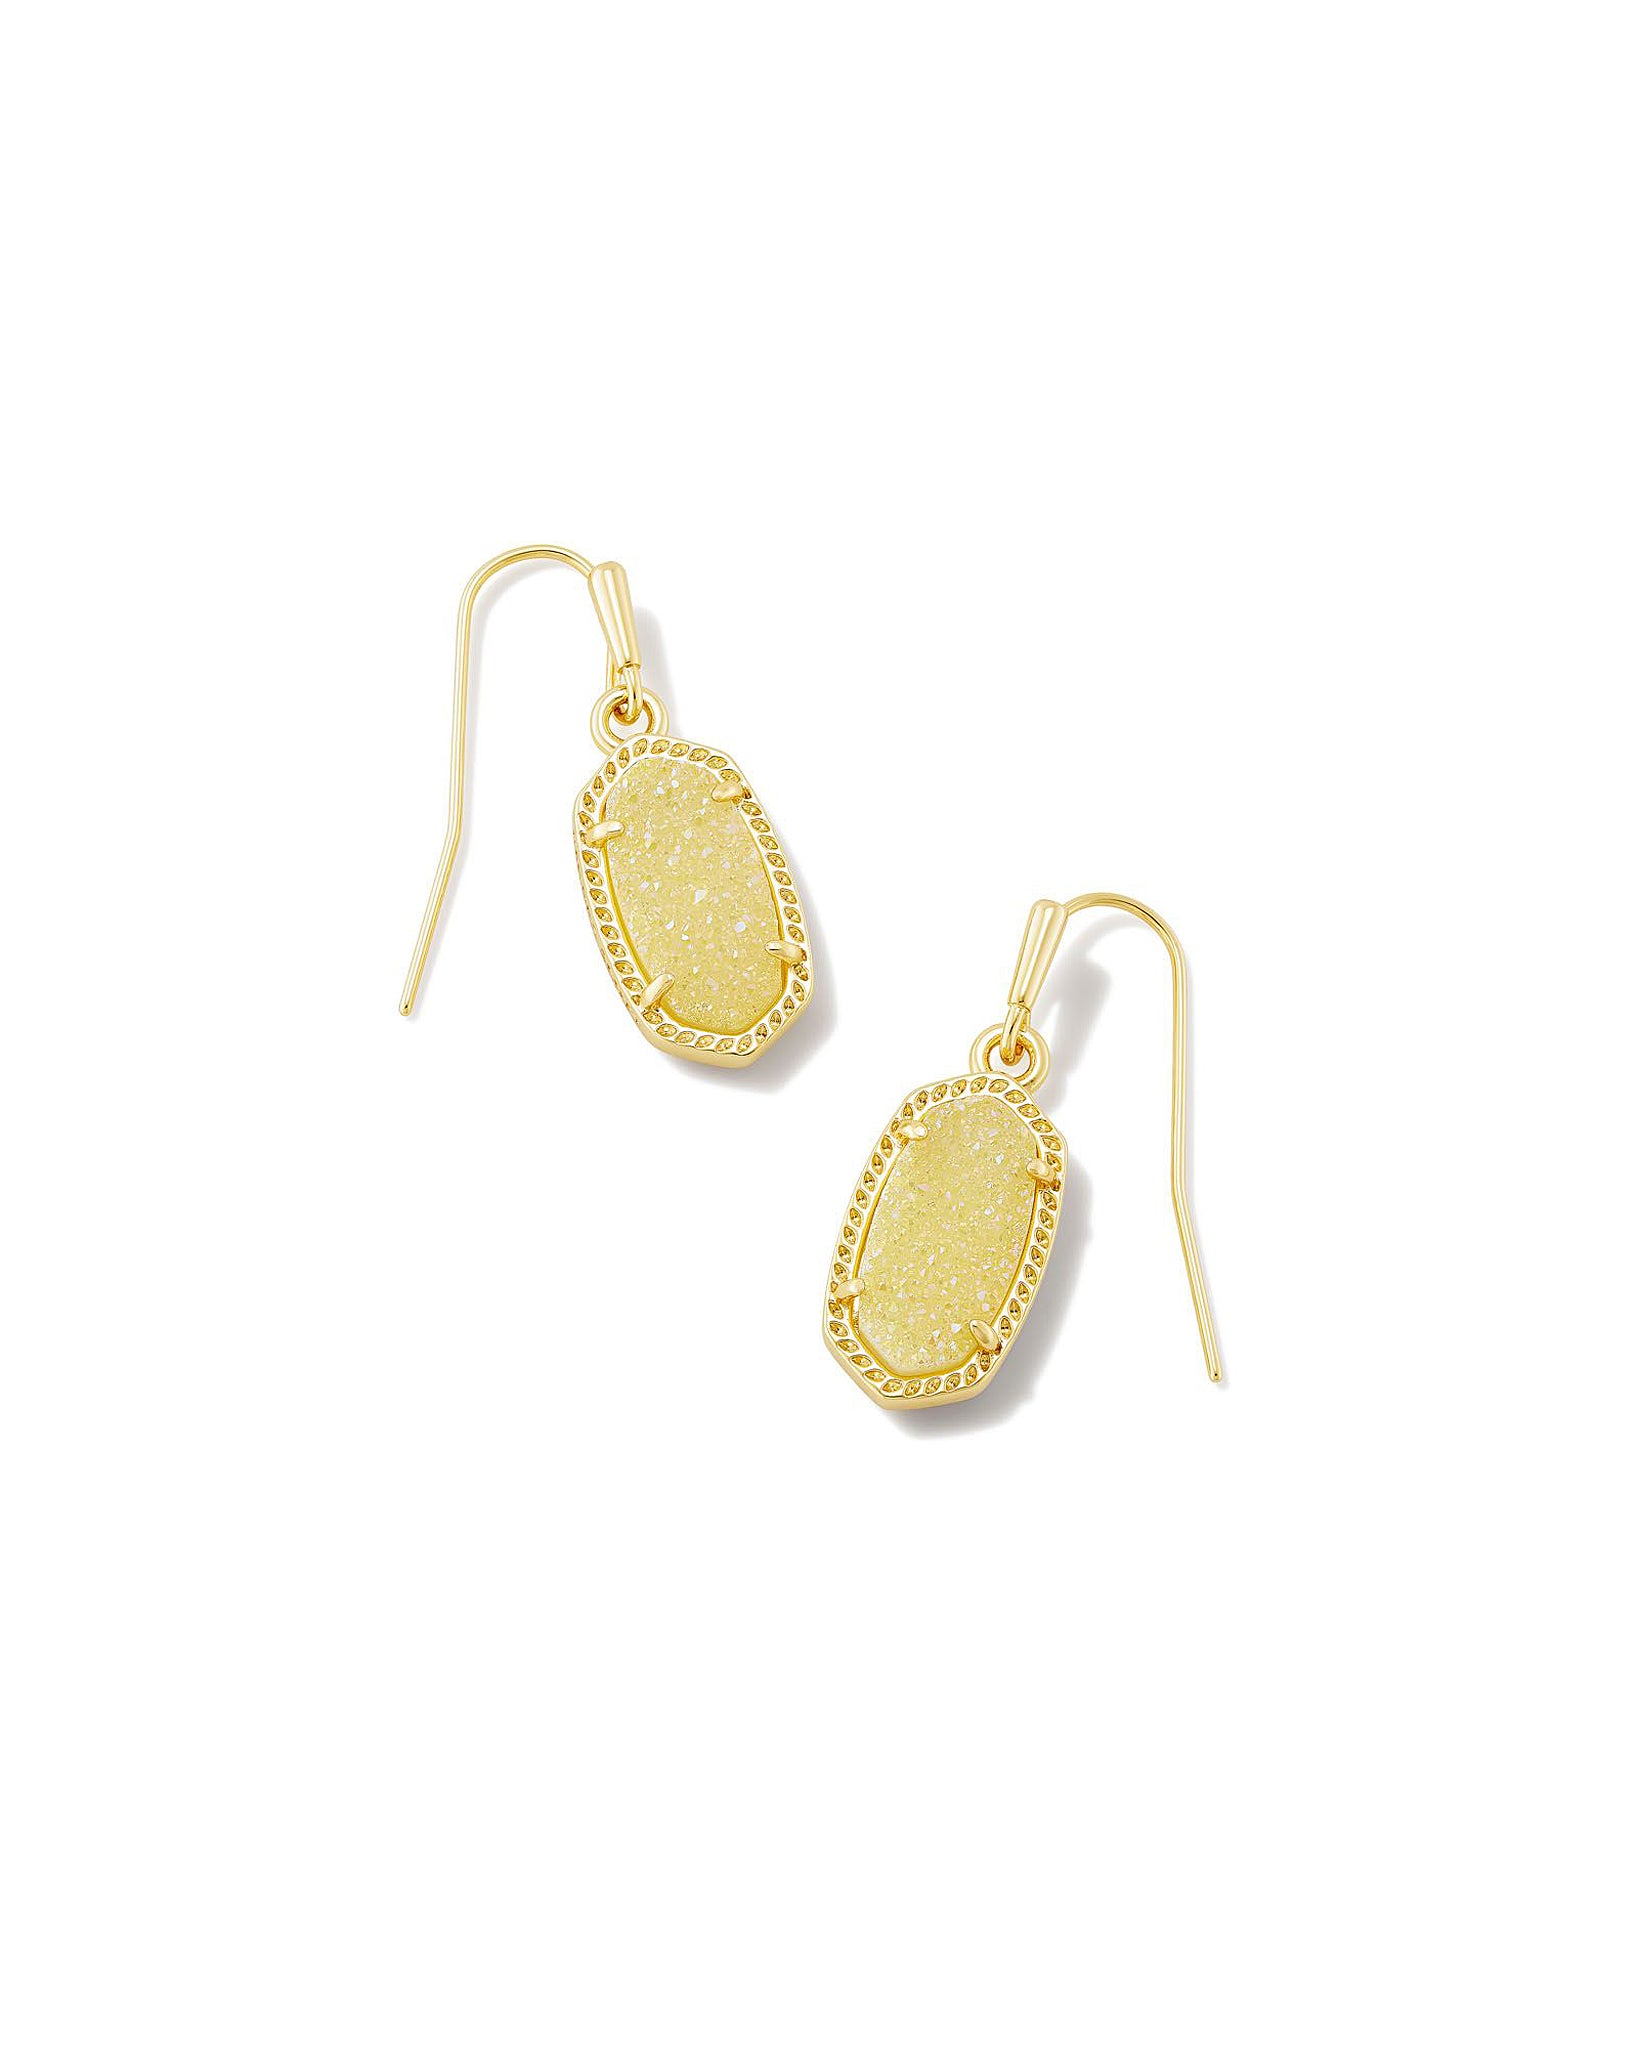 Kendra Scott Lee Oval Dangle Earrings in Light Yellow Drusy and Gold